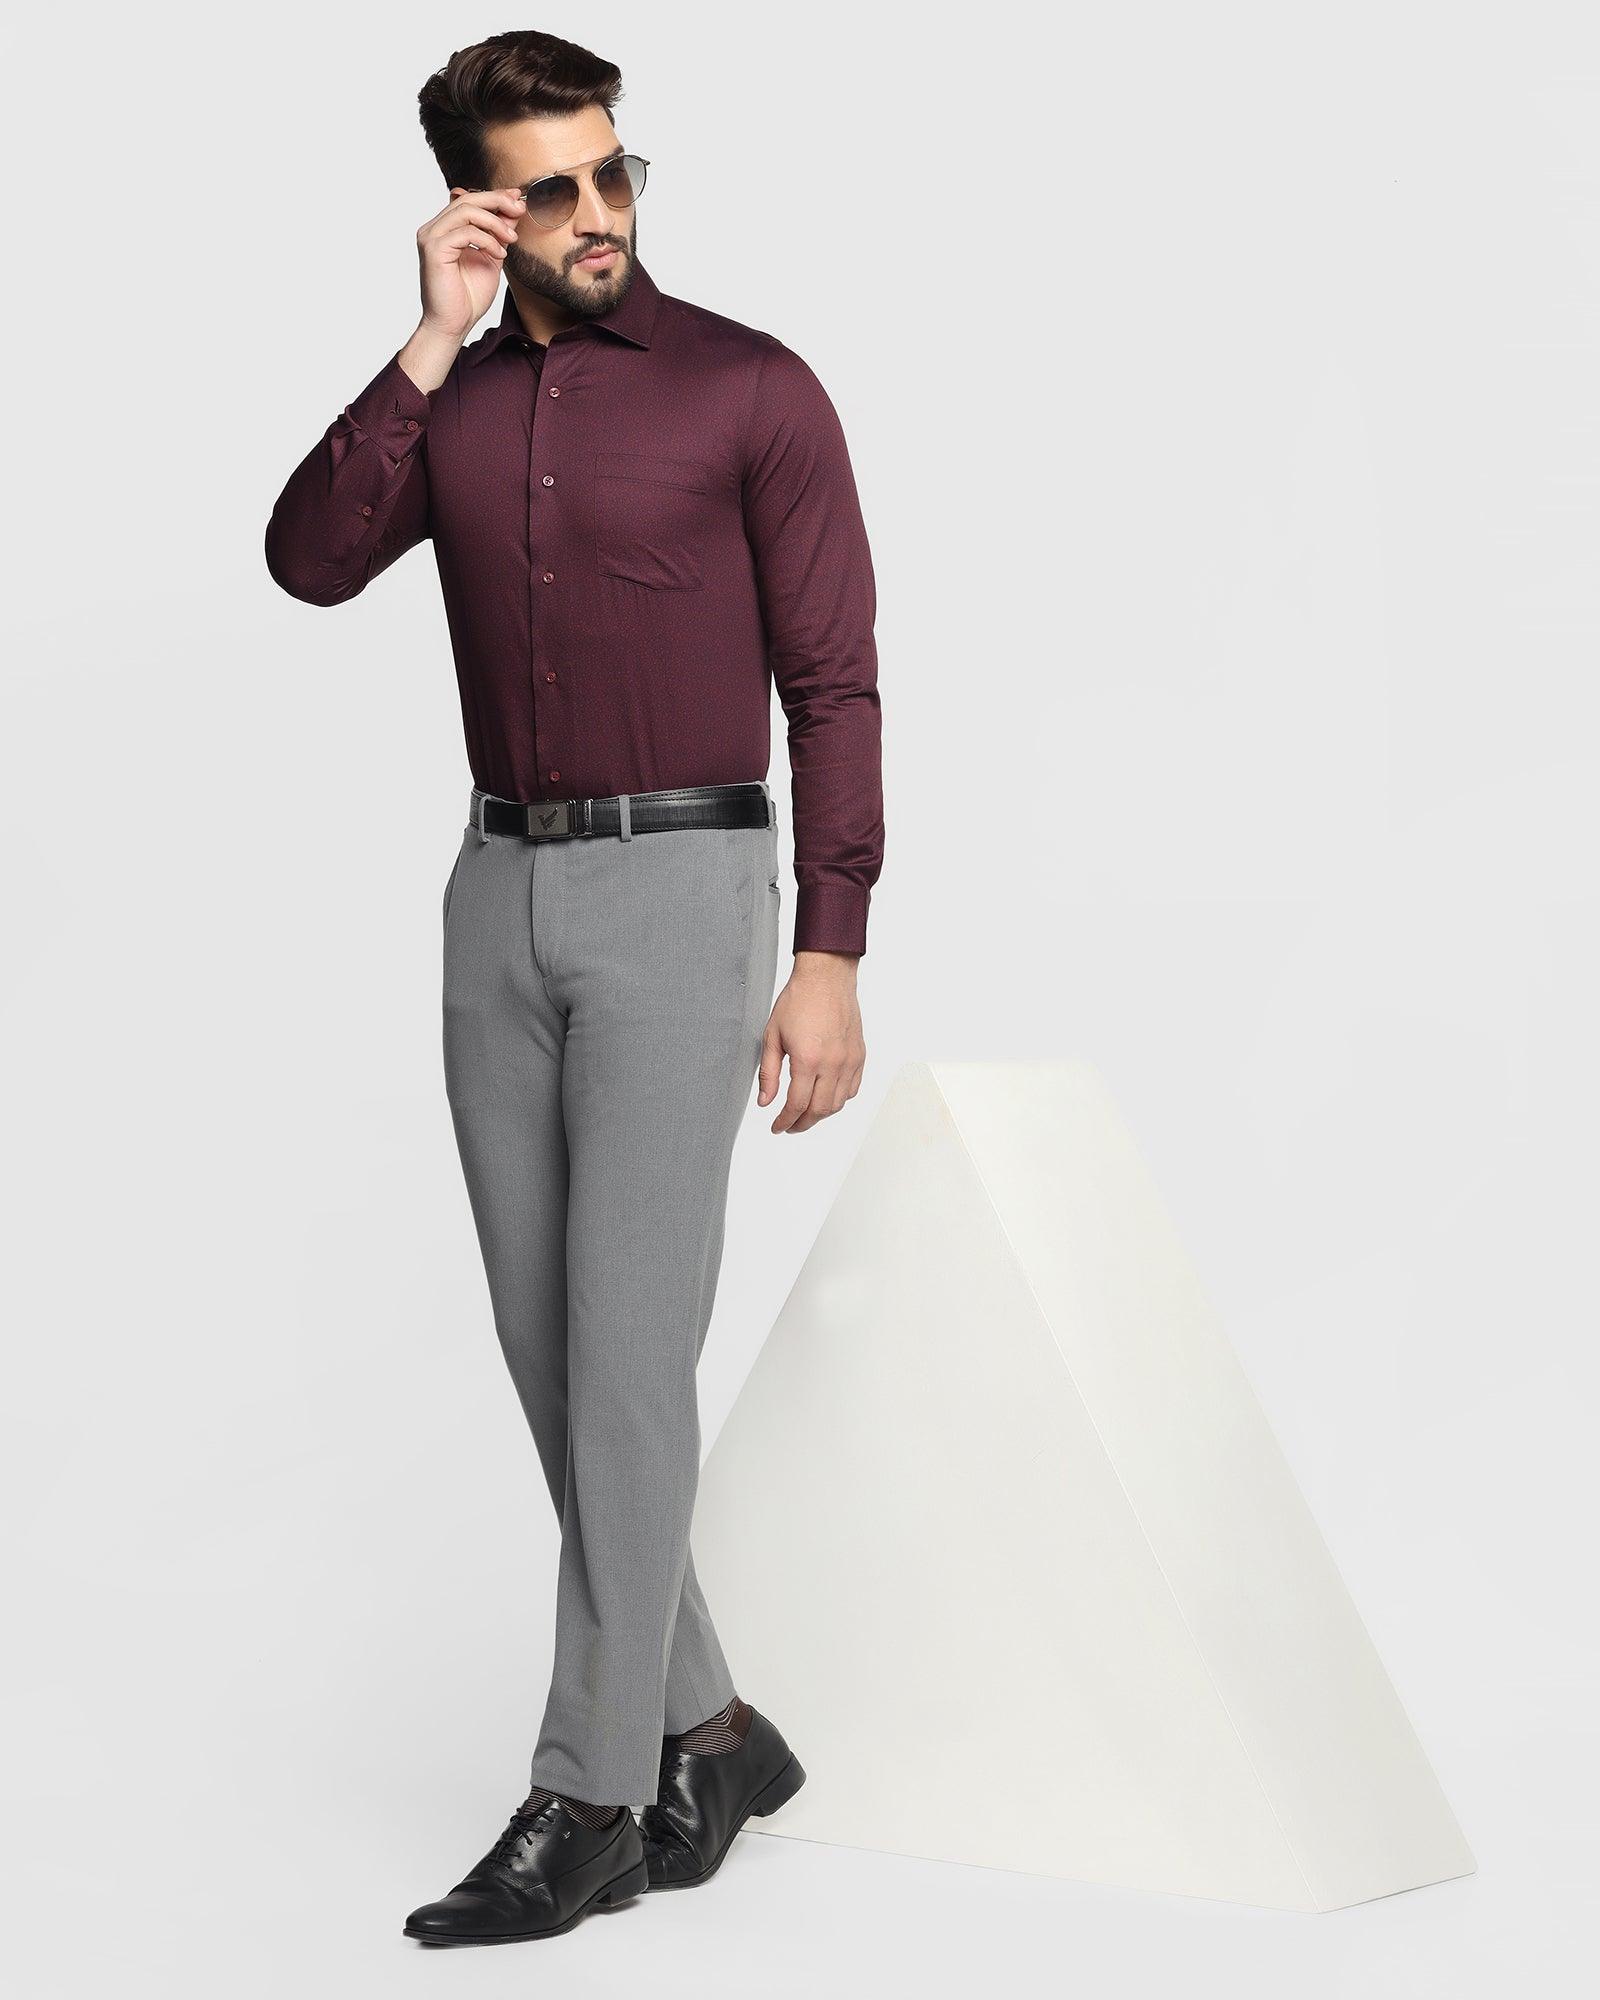 Buy SREY Slim fit Office wear Combo Formal Trouser for Men Black at  Amazon.in